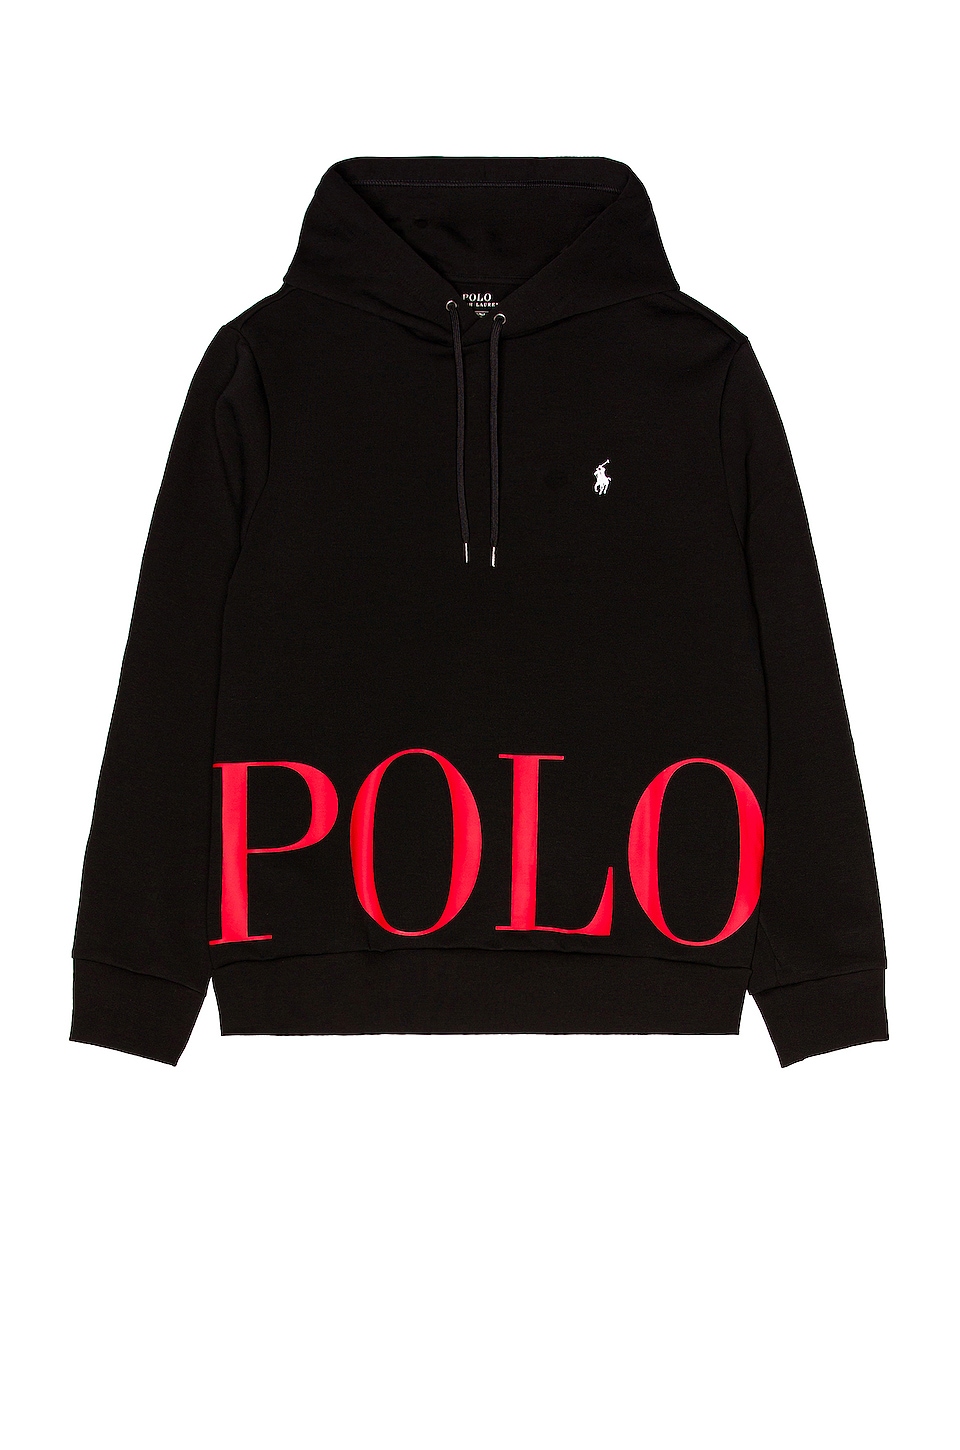 Polo Ralph Lauren Double Knit Hoodie in Black | REVOLVE